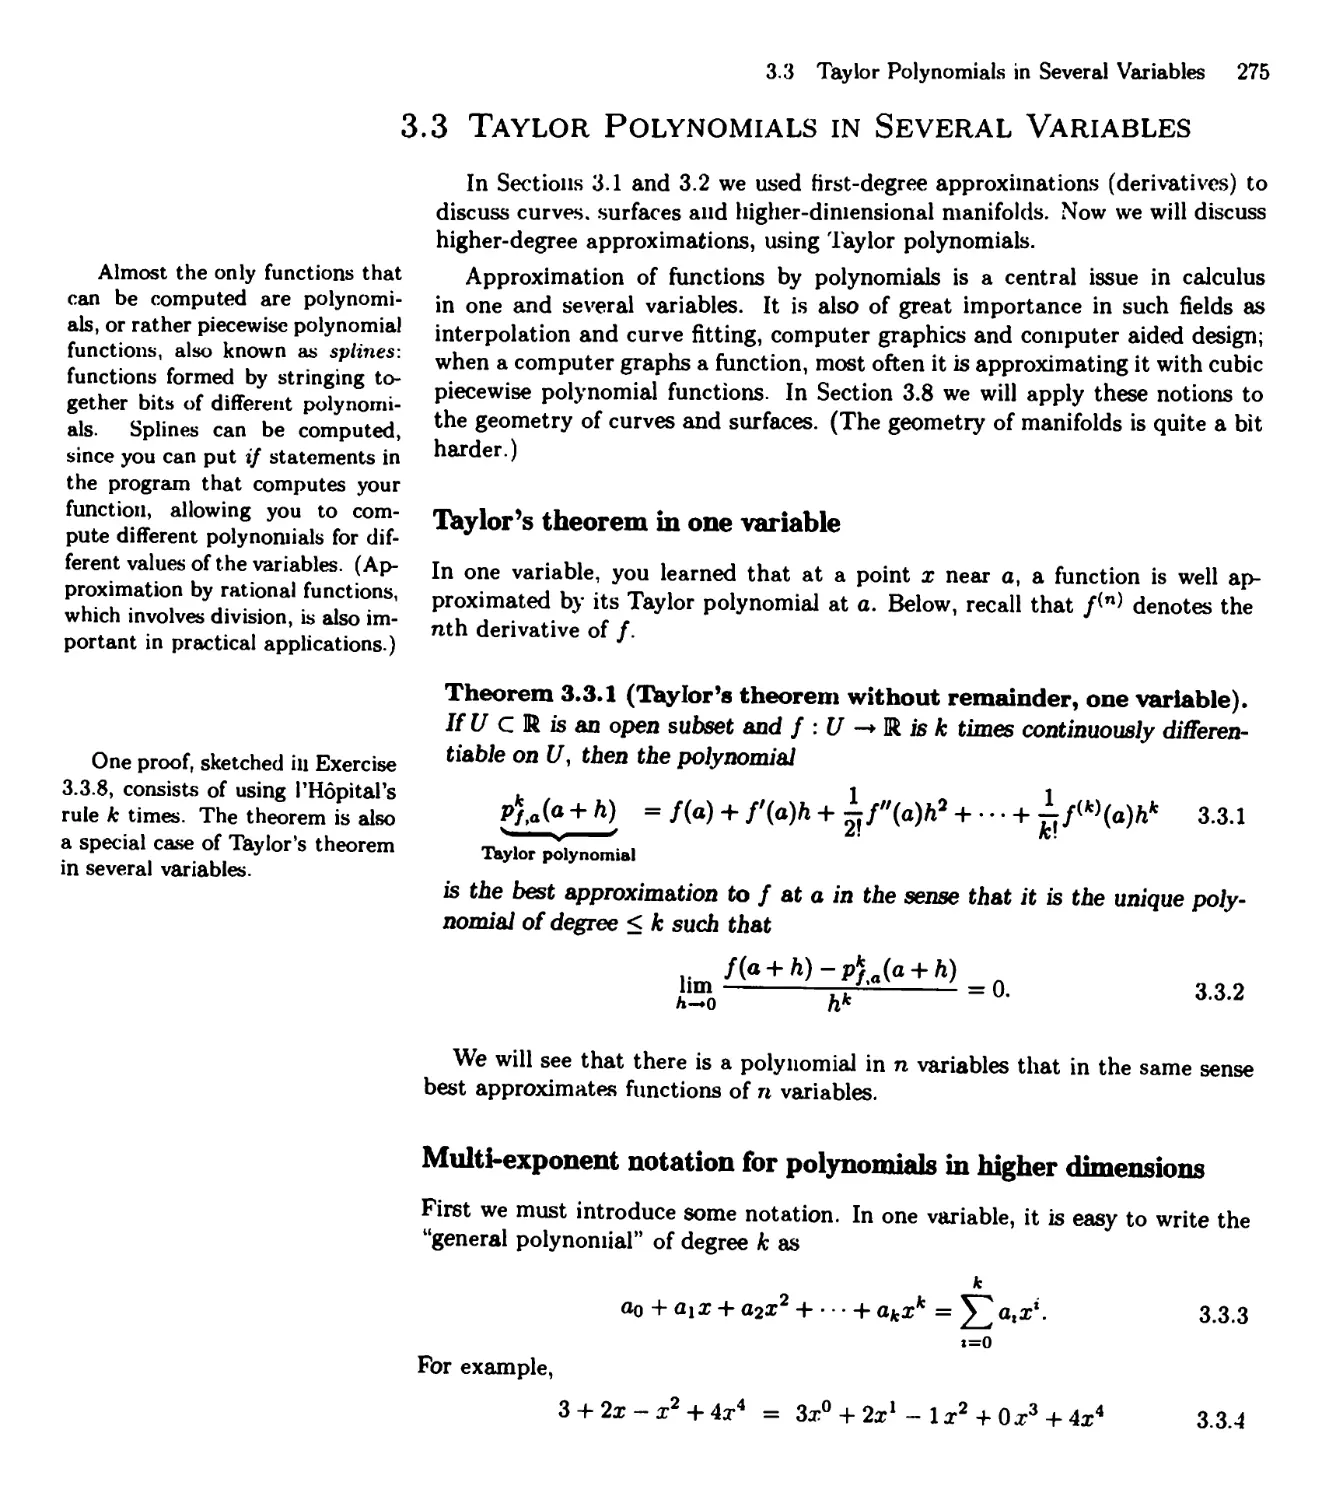 3.3 Taylor Polynomials in Several Variables